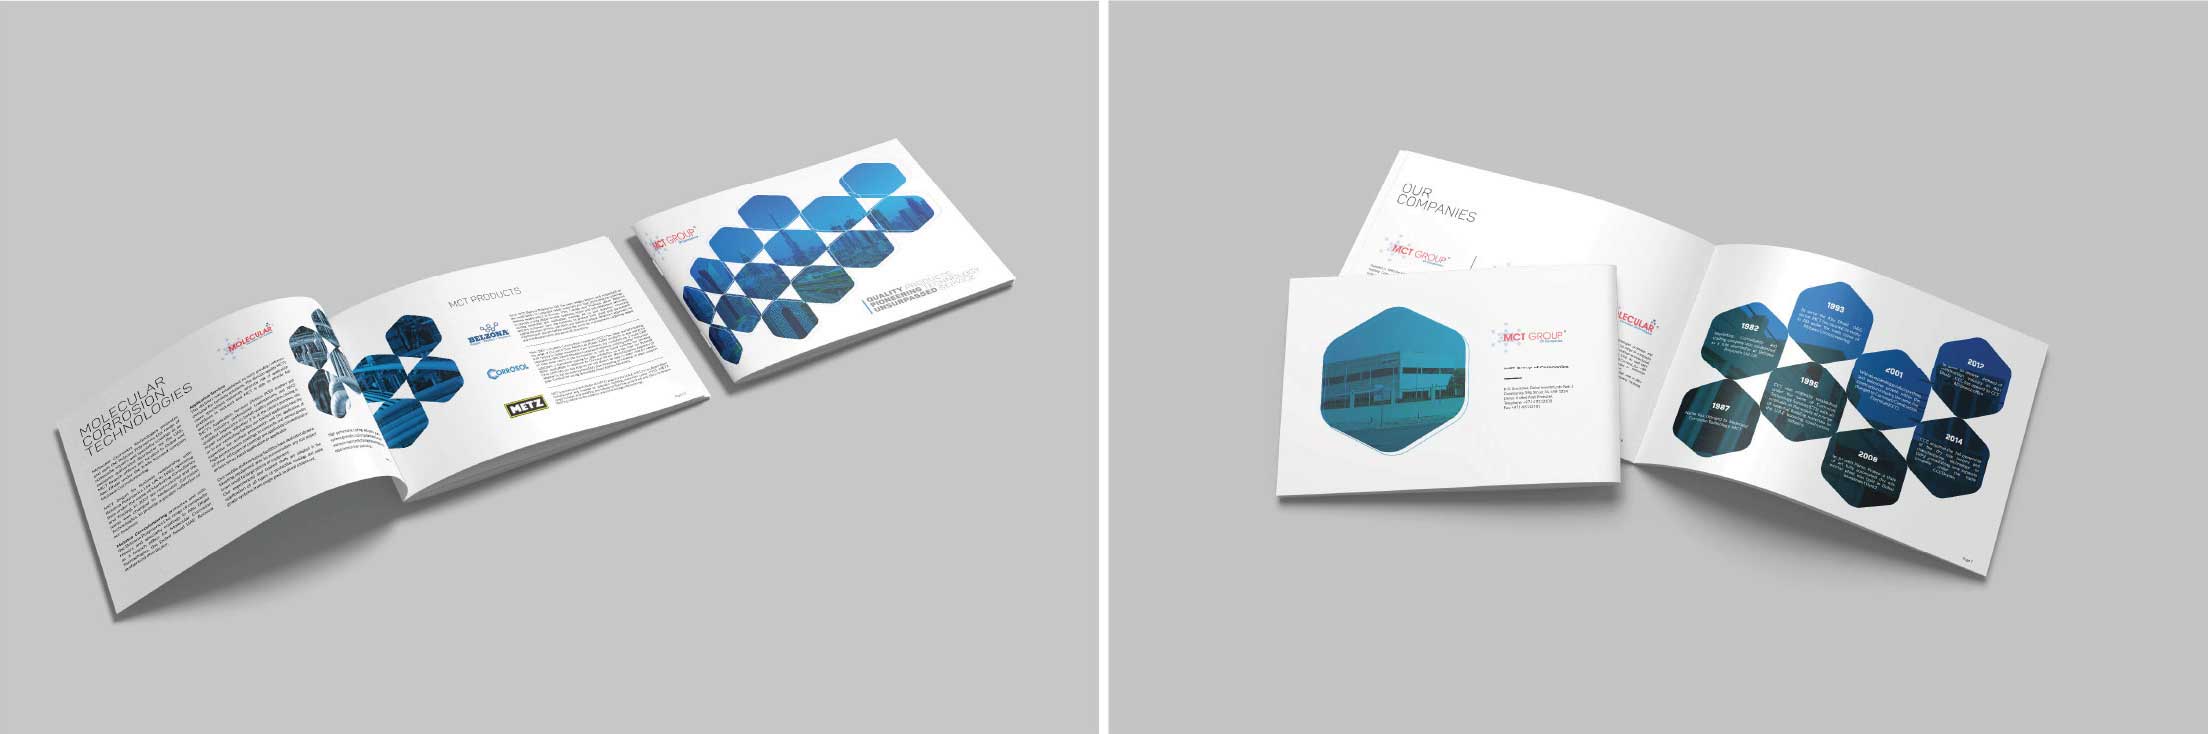 MCT brochure pages design - 360besta portfolio